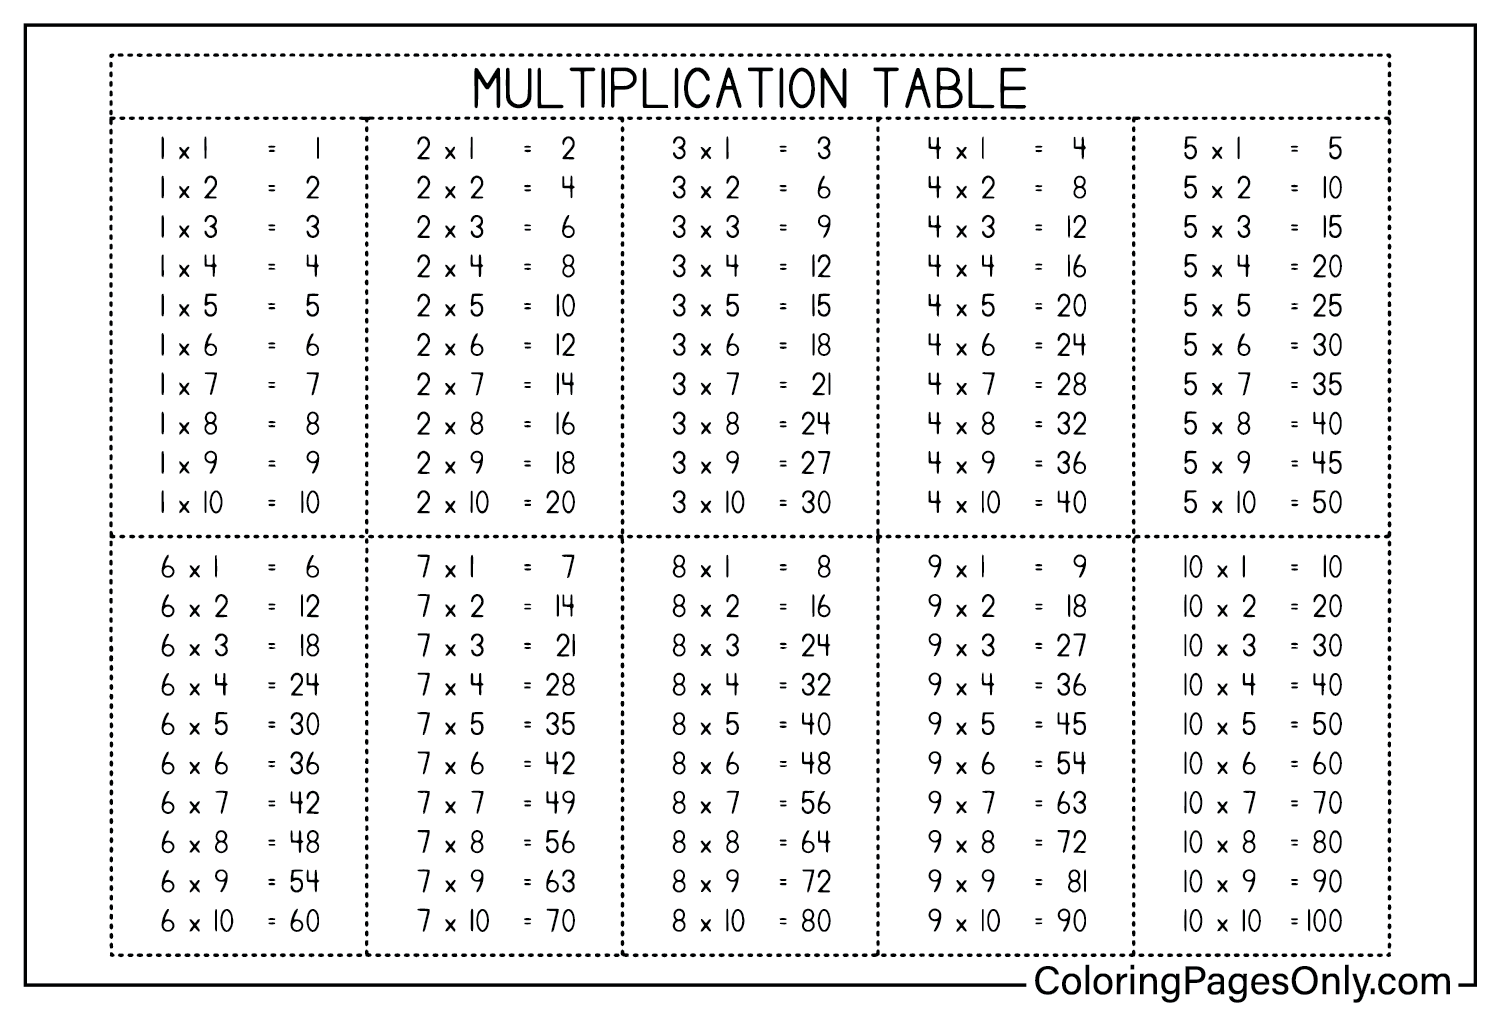 Coloriage gratuit du tableau de multiplication à partir du tableau de multiplication